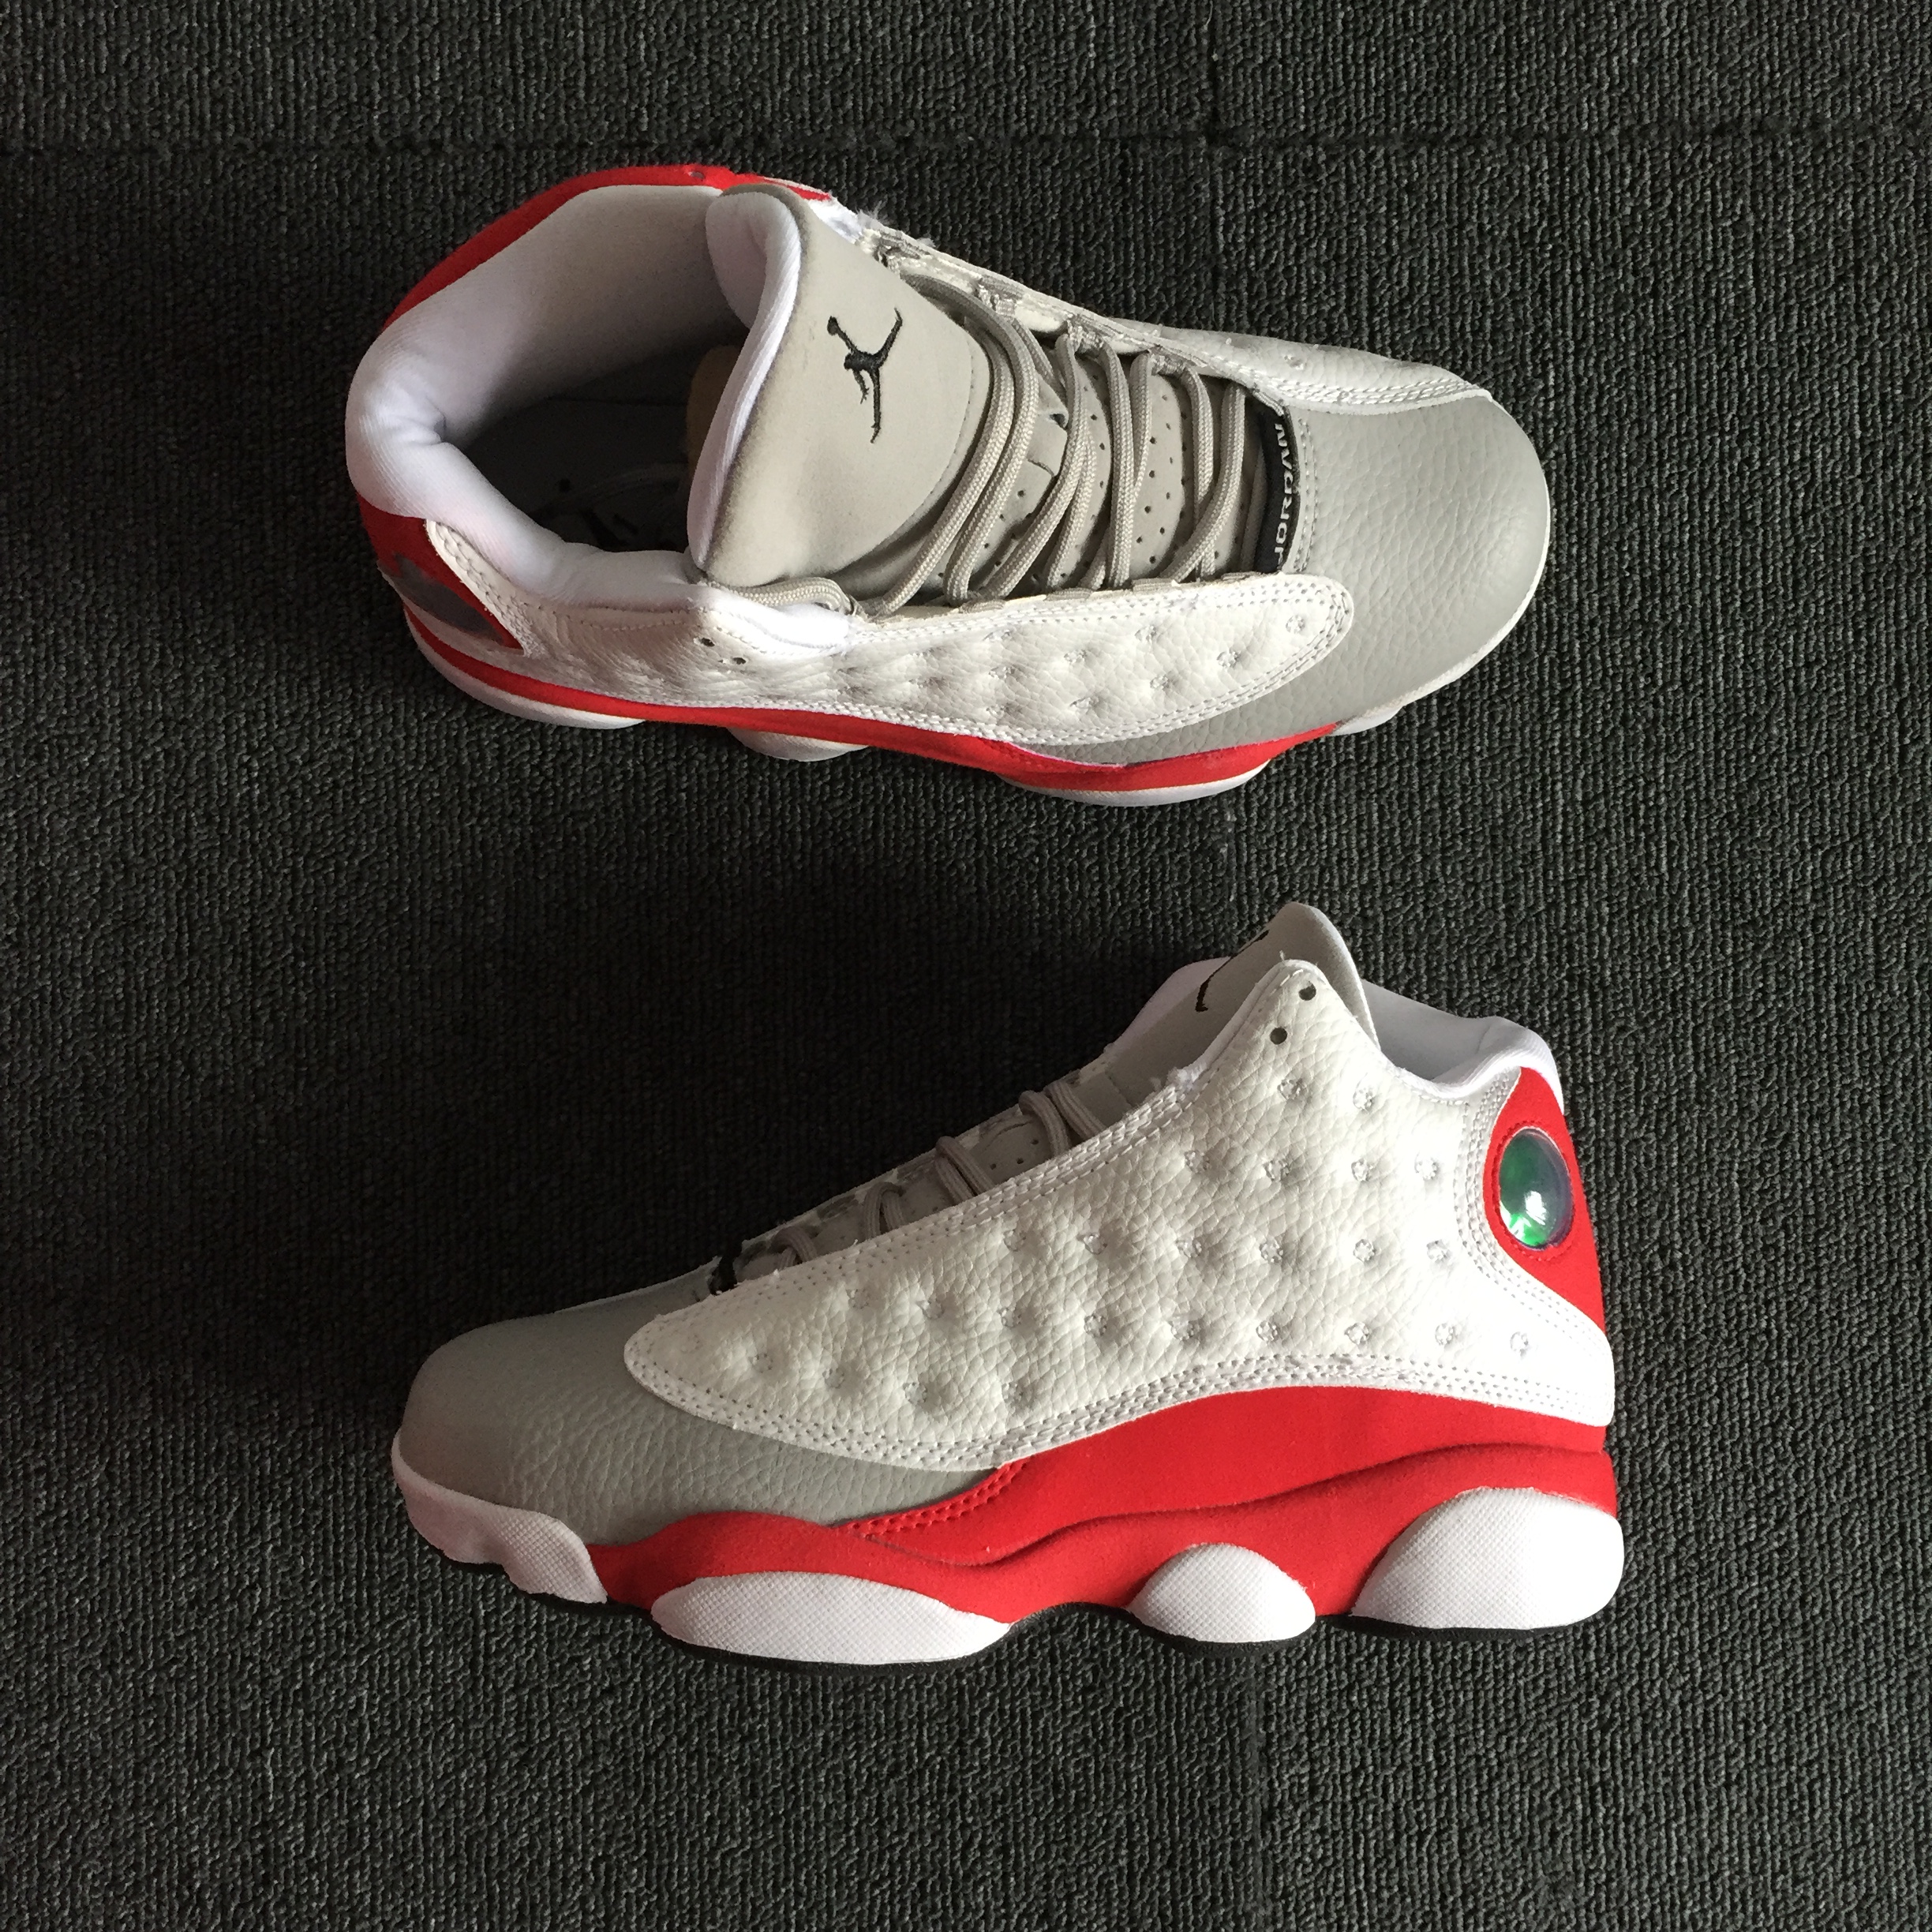 New Air Jordan 13 Kidd White Grey Red Shoes